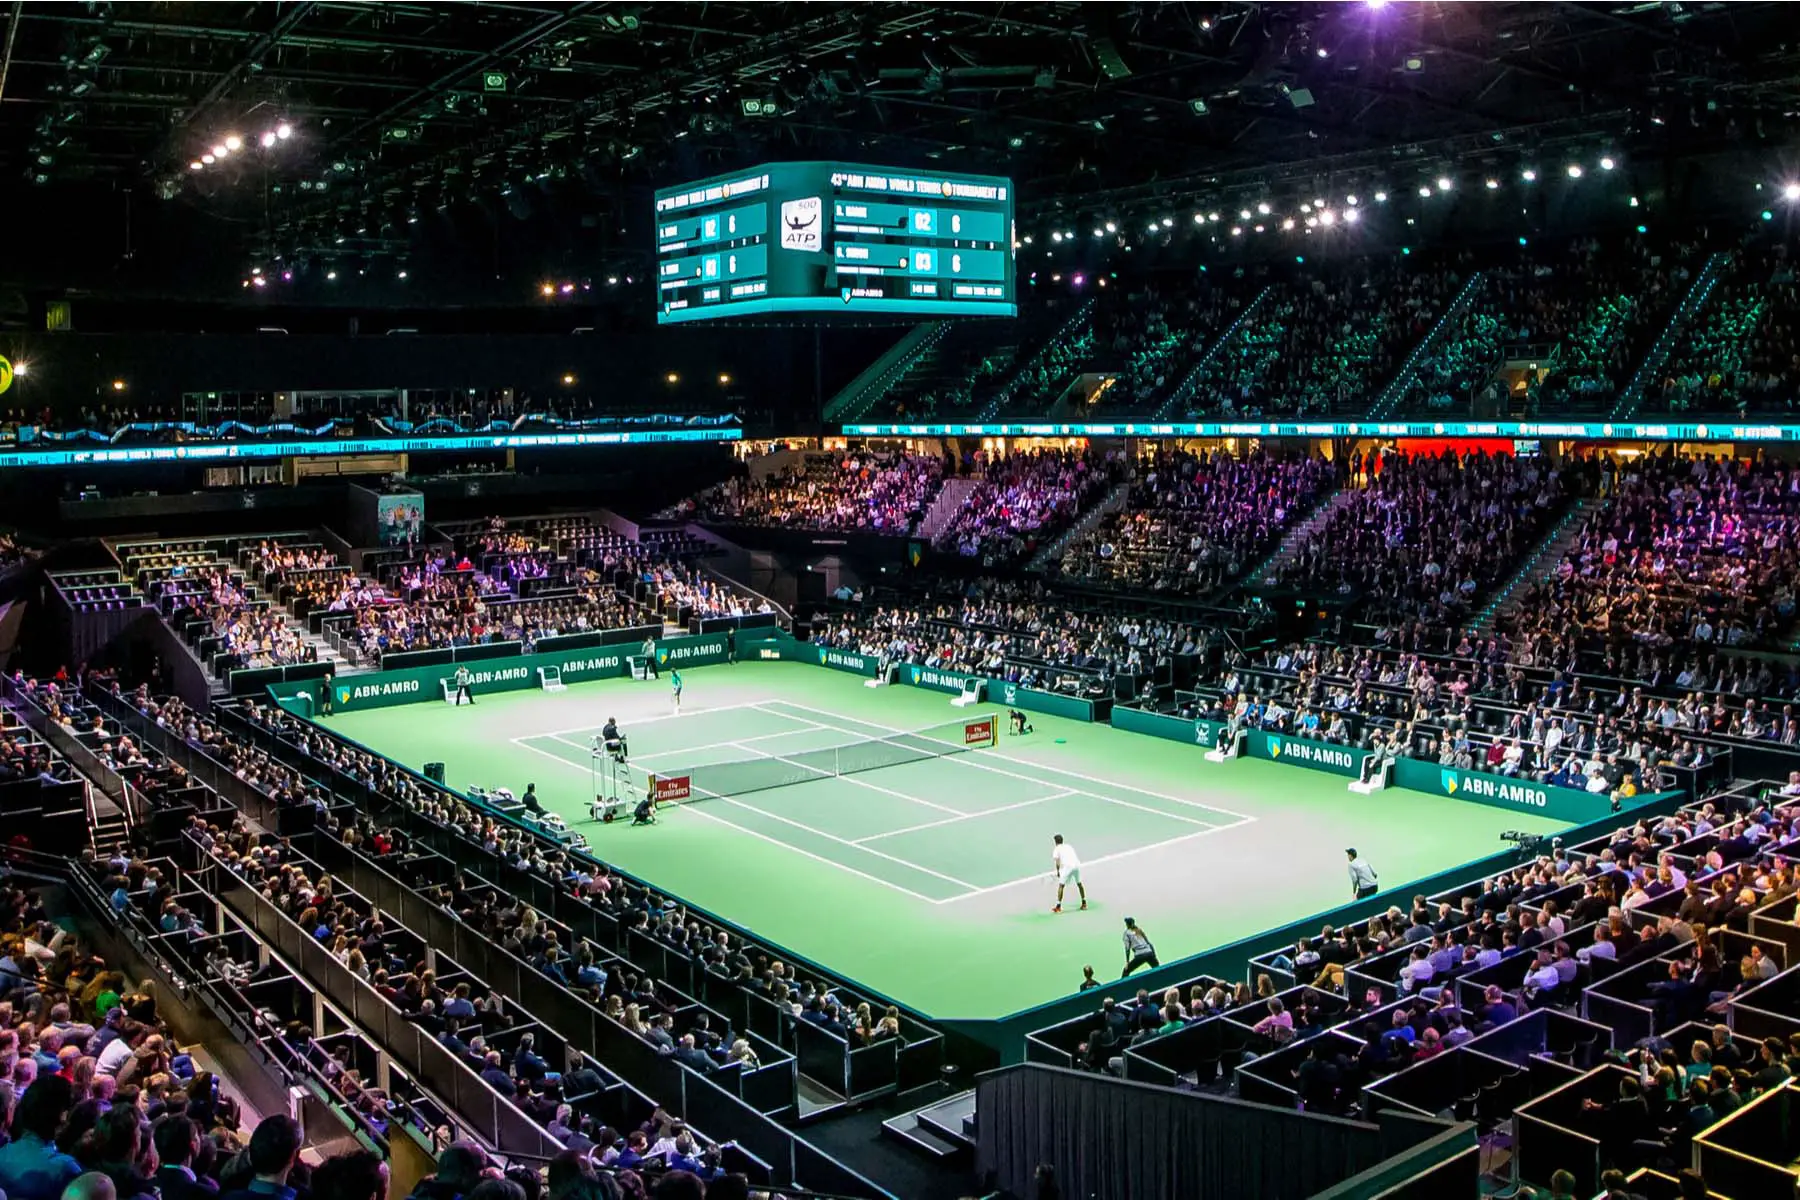 tennis tournament played in Rotterdam